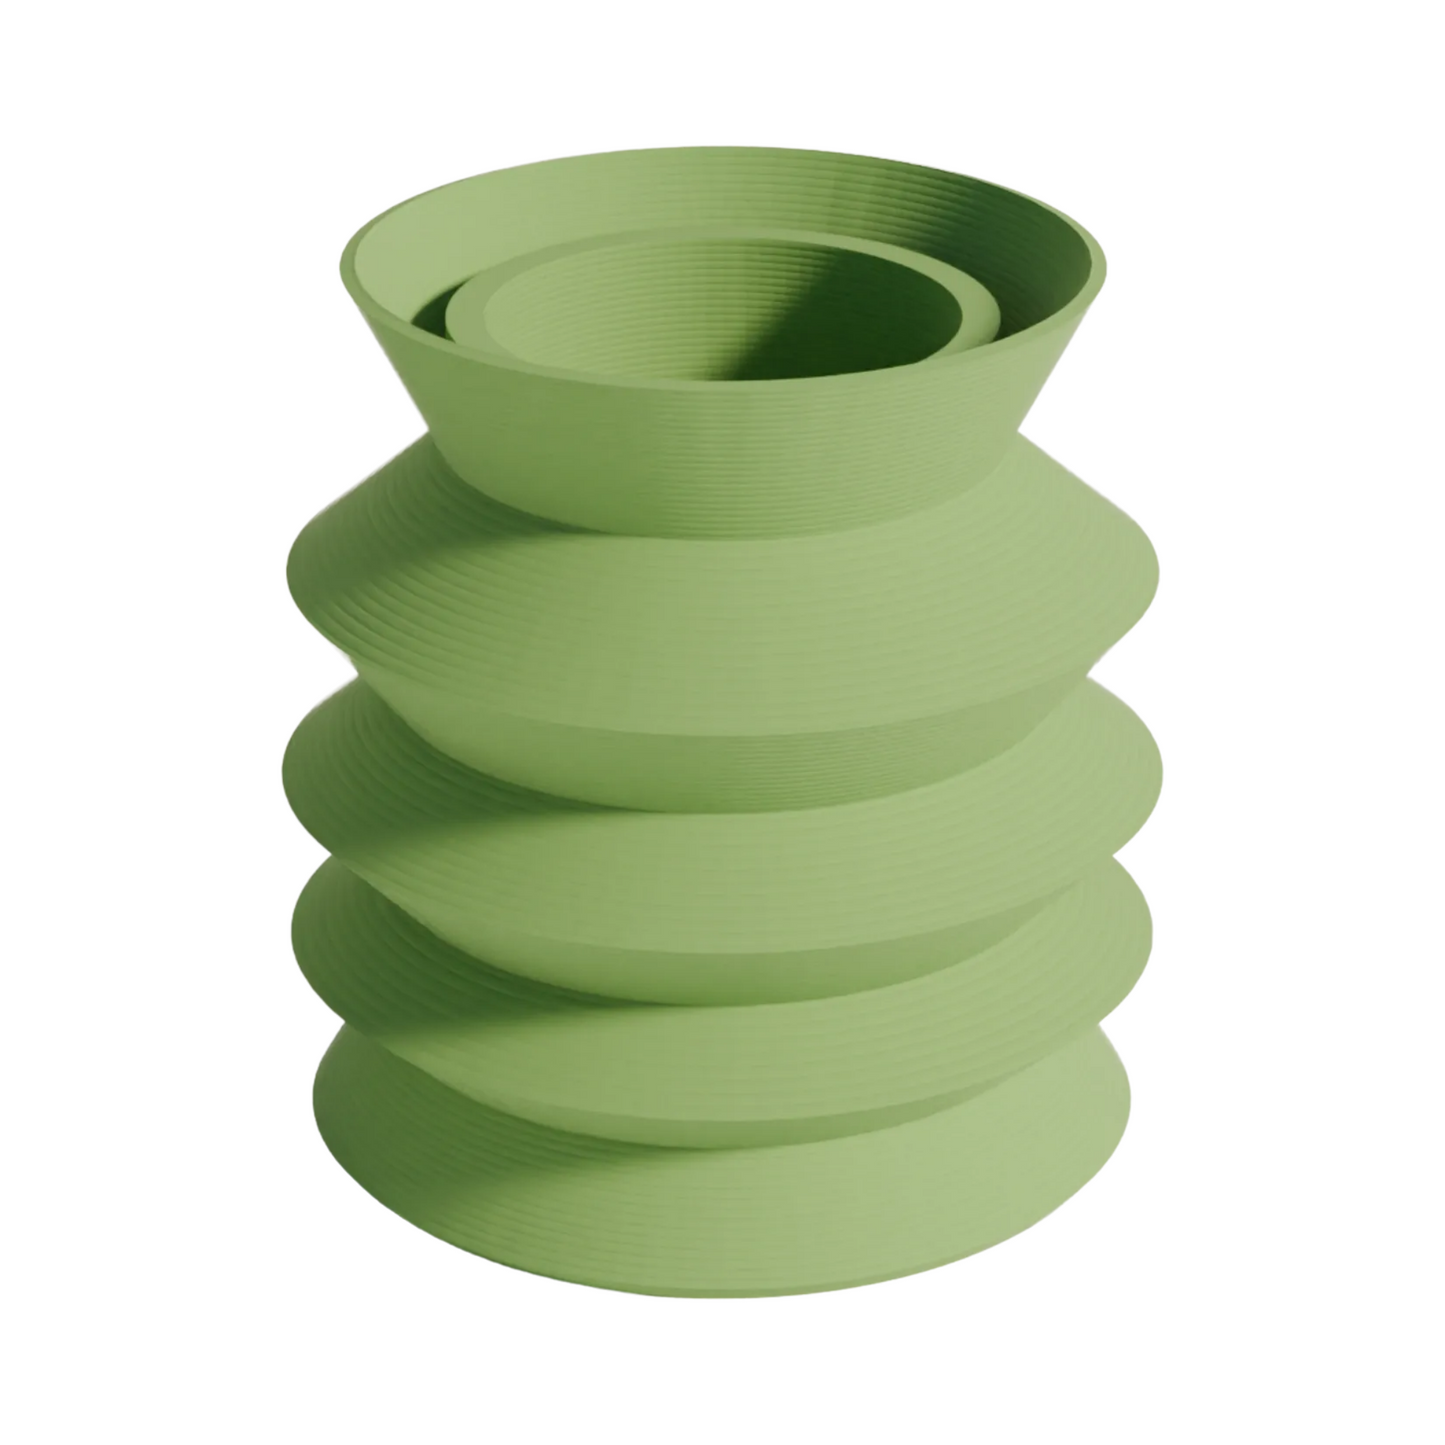 Brescia design vase green edition